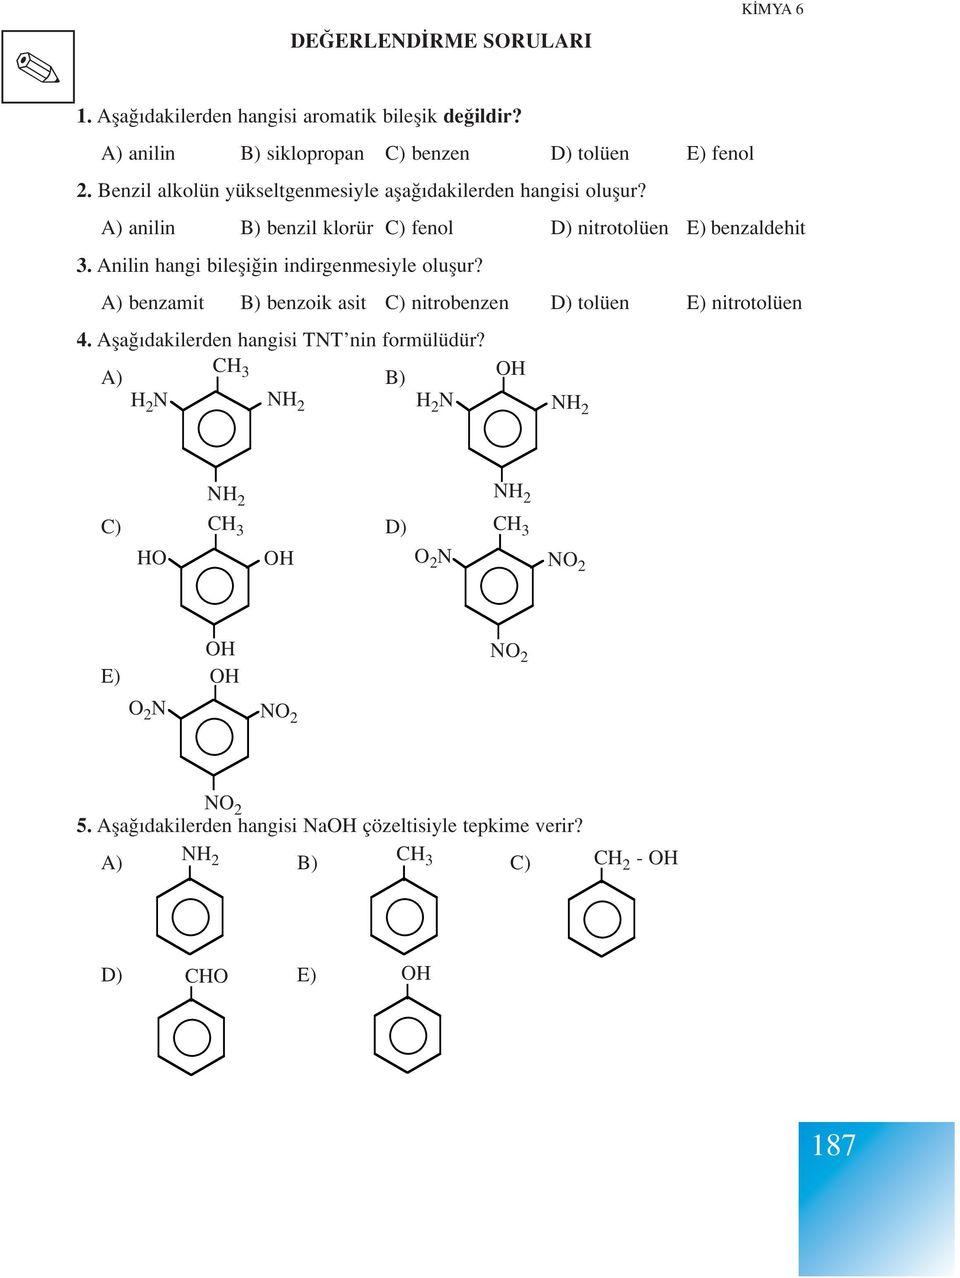 Anilin hangi bilefli in indirgenmesiyle oluflur? A) benzamit B) benzoik asit C) nitrobenzen D) tolüen E) nitrotolüen 4.